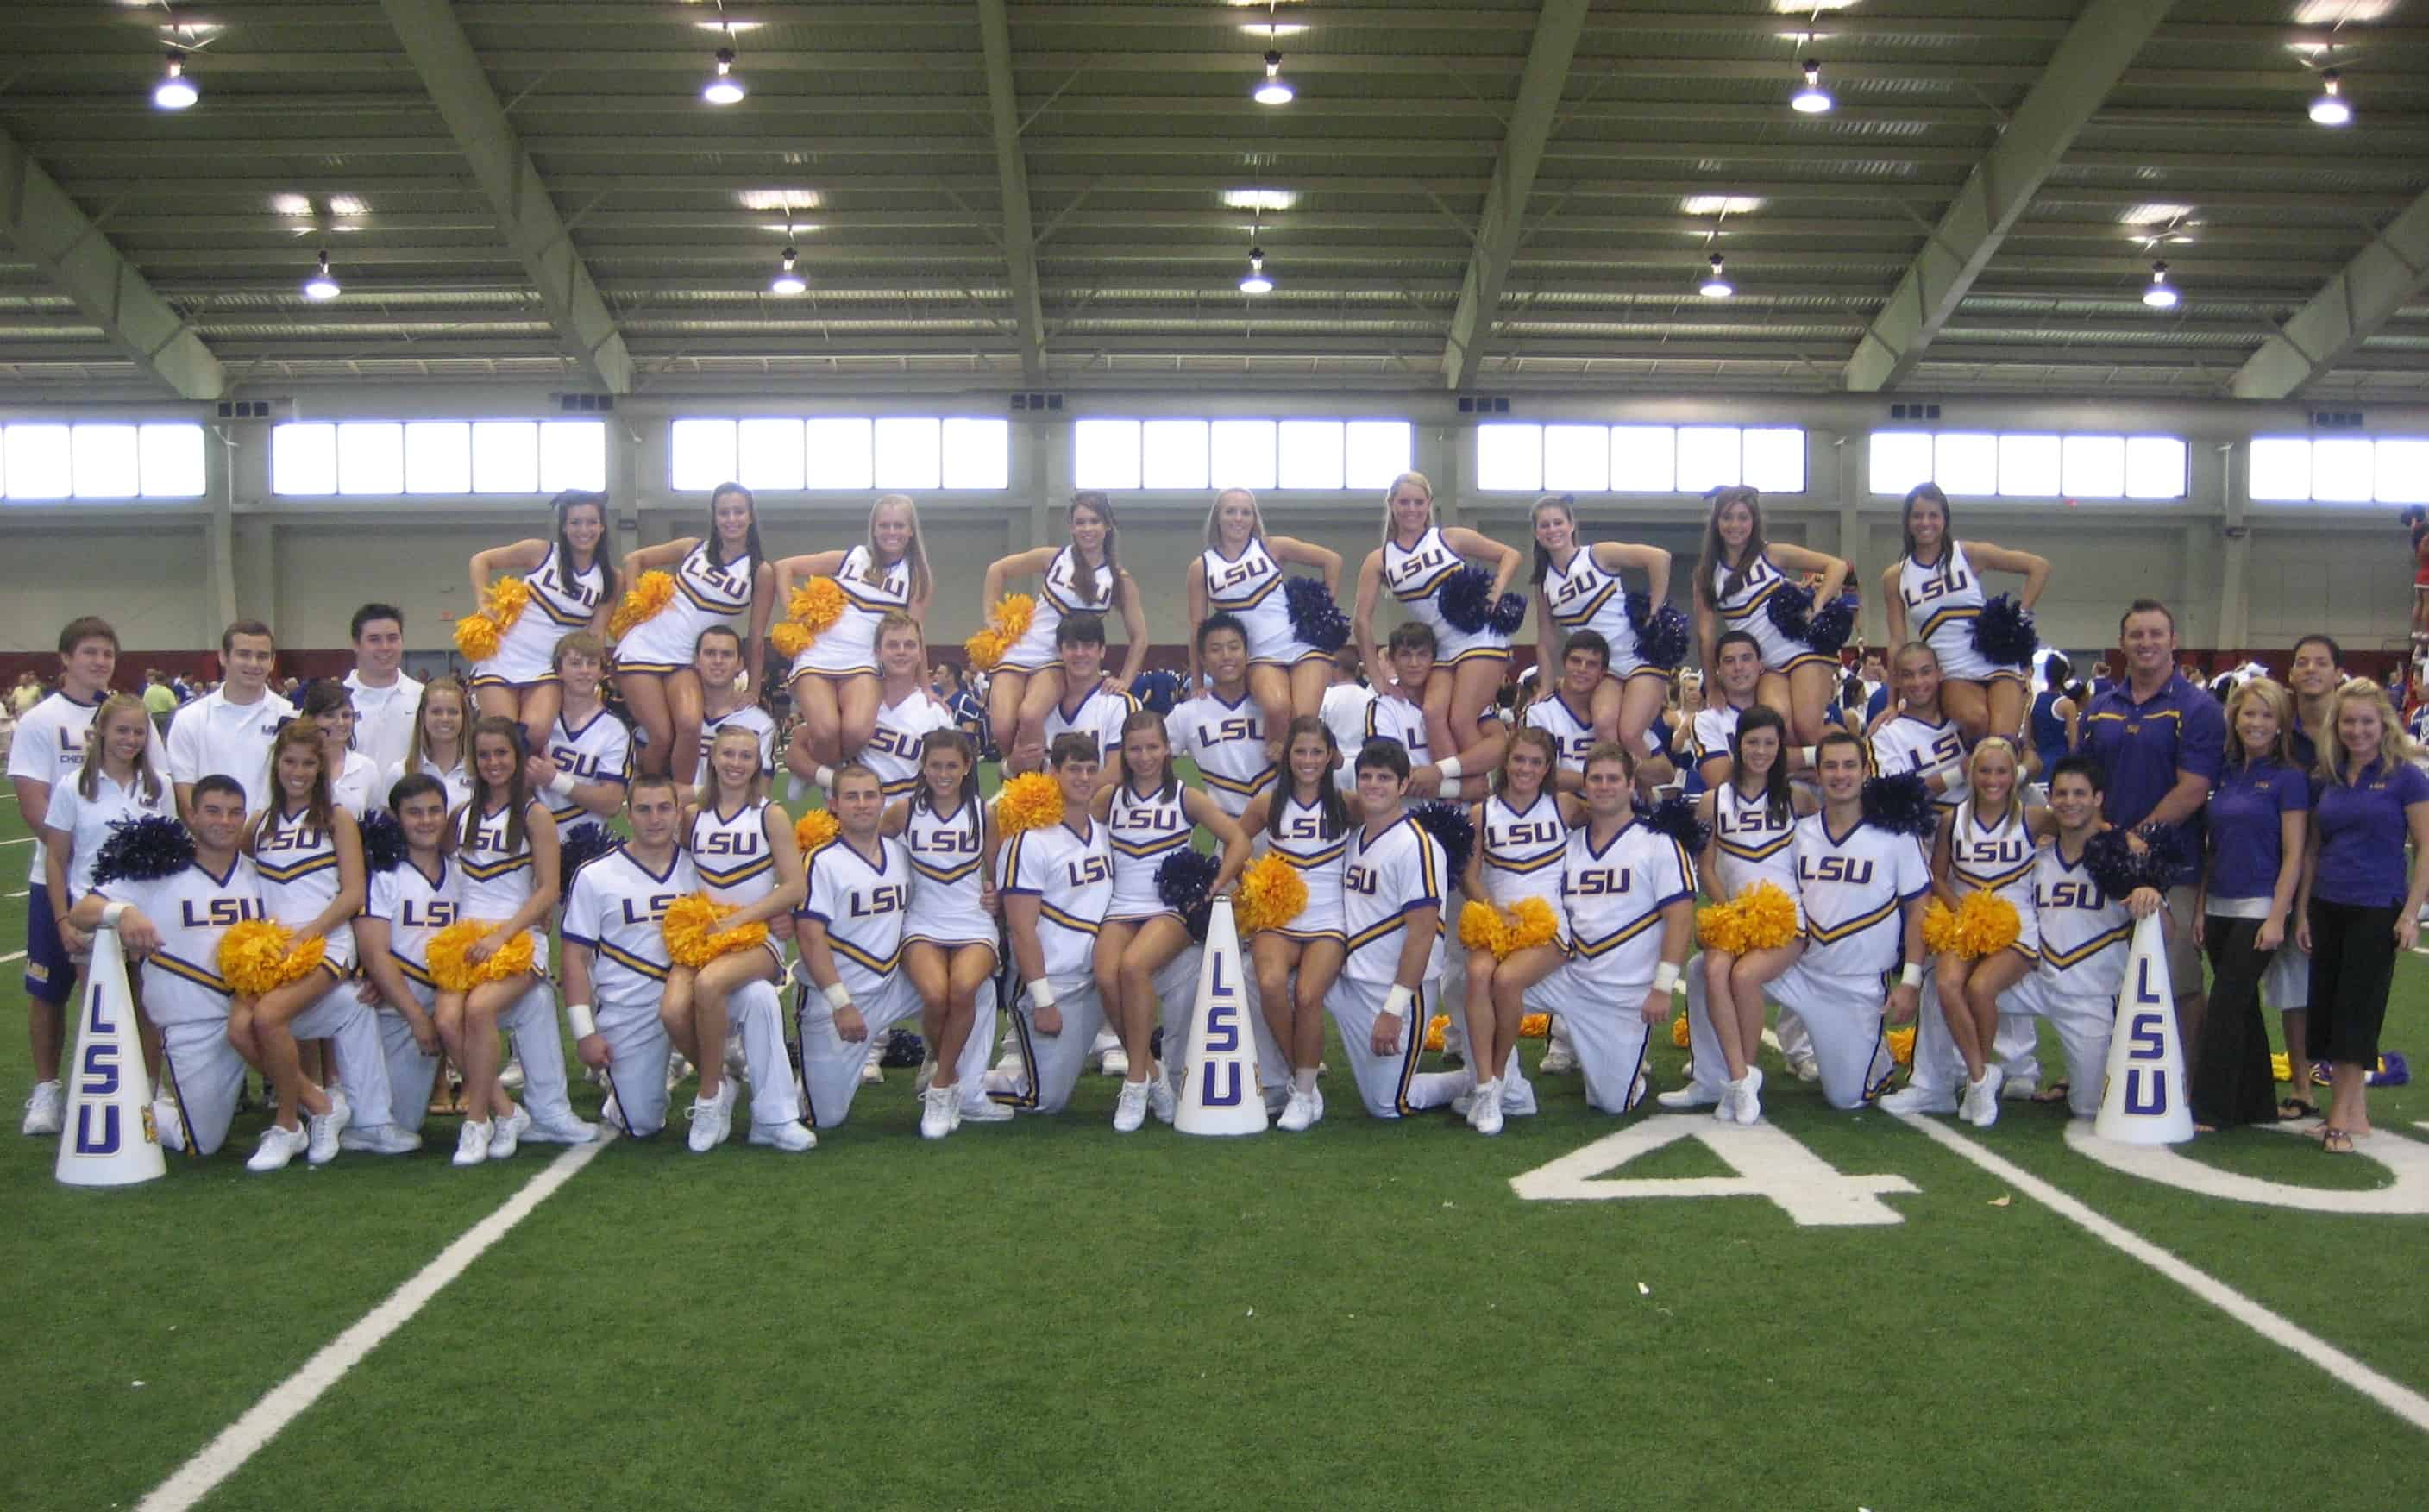 LSU Cheer Squad